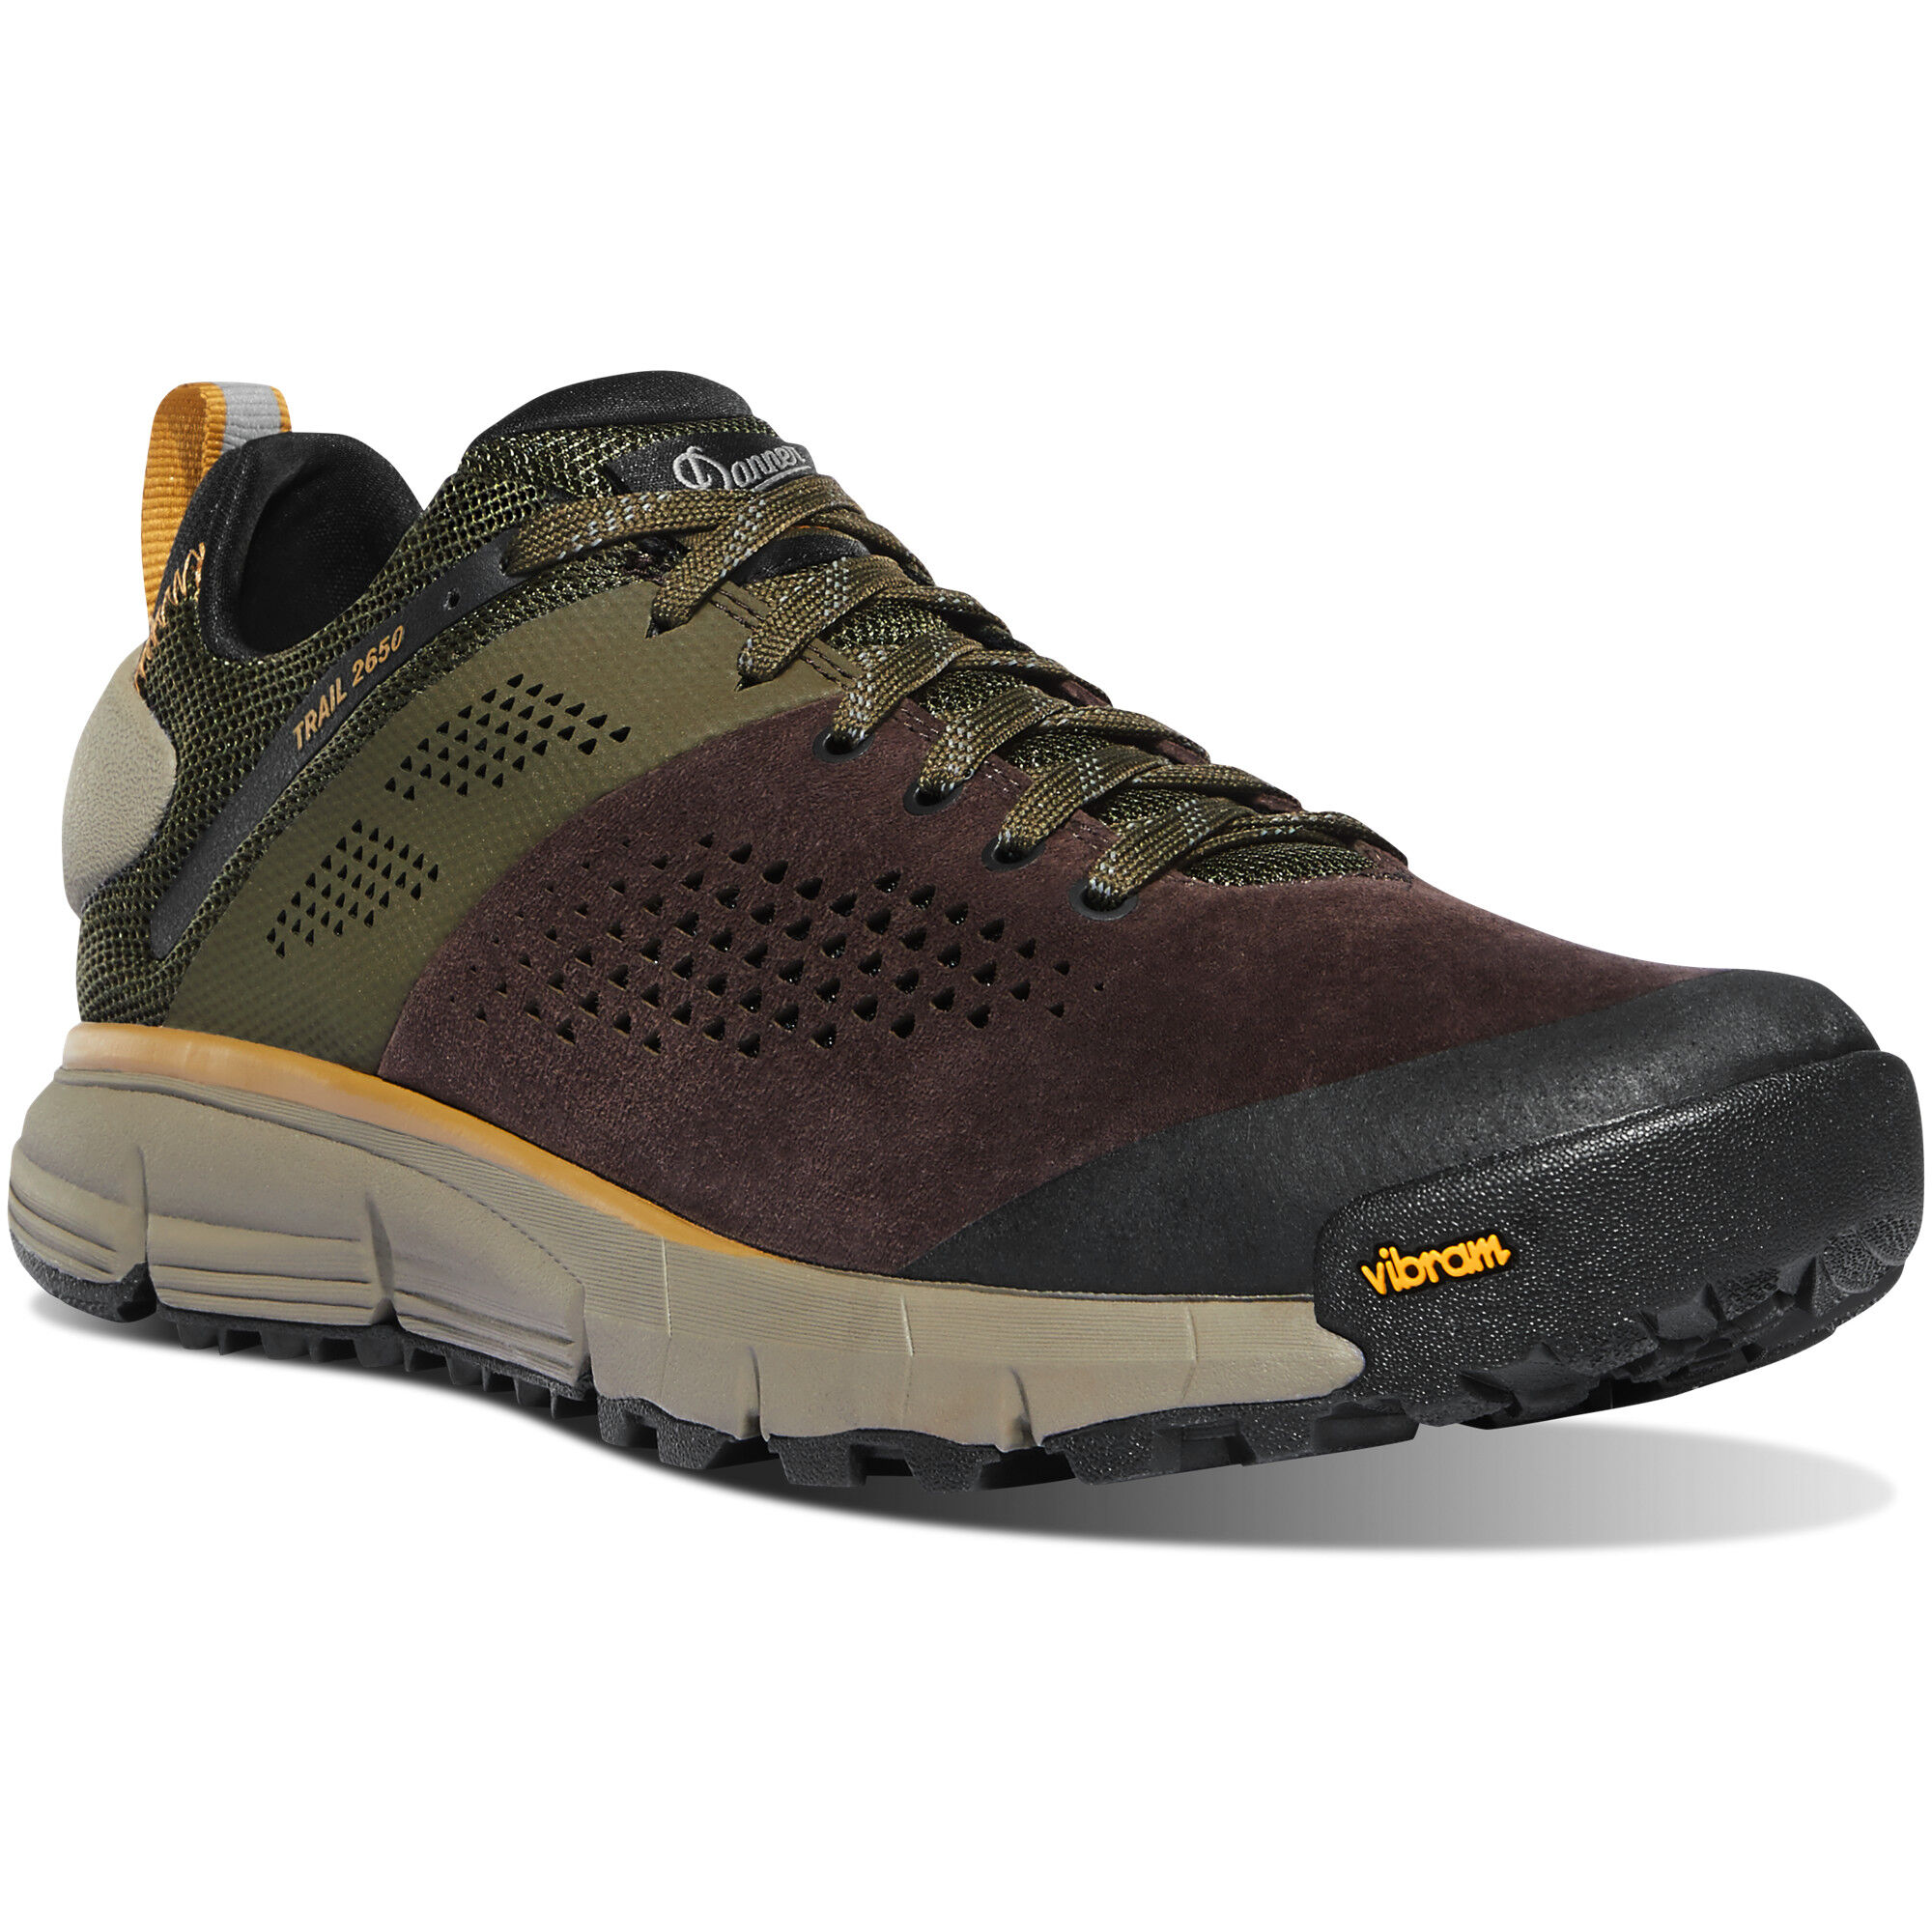 Danner Trail 2650 3 - Walking shoes - Men's